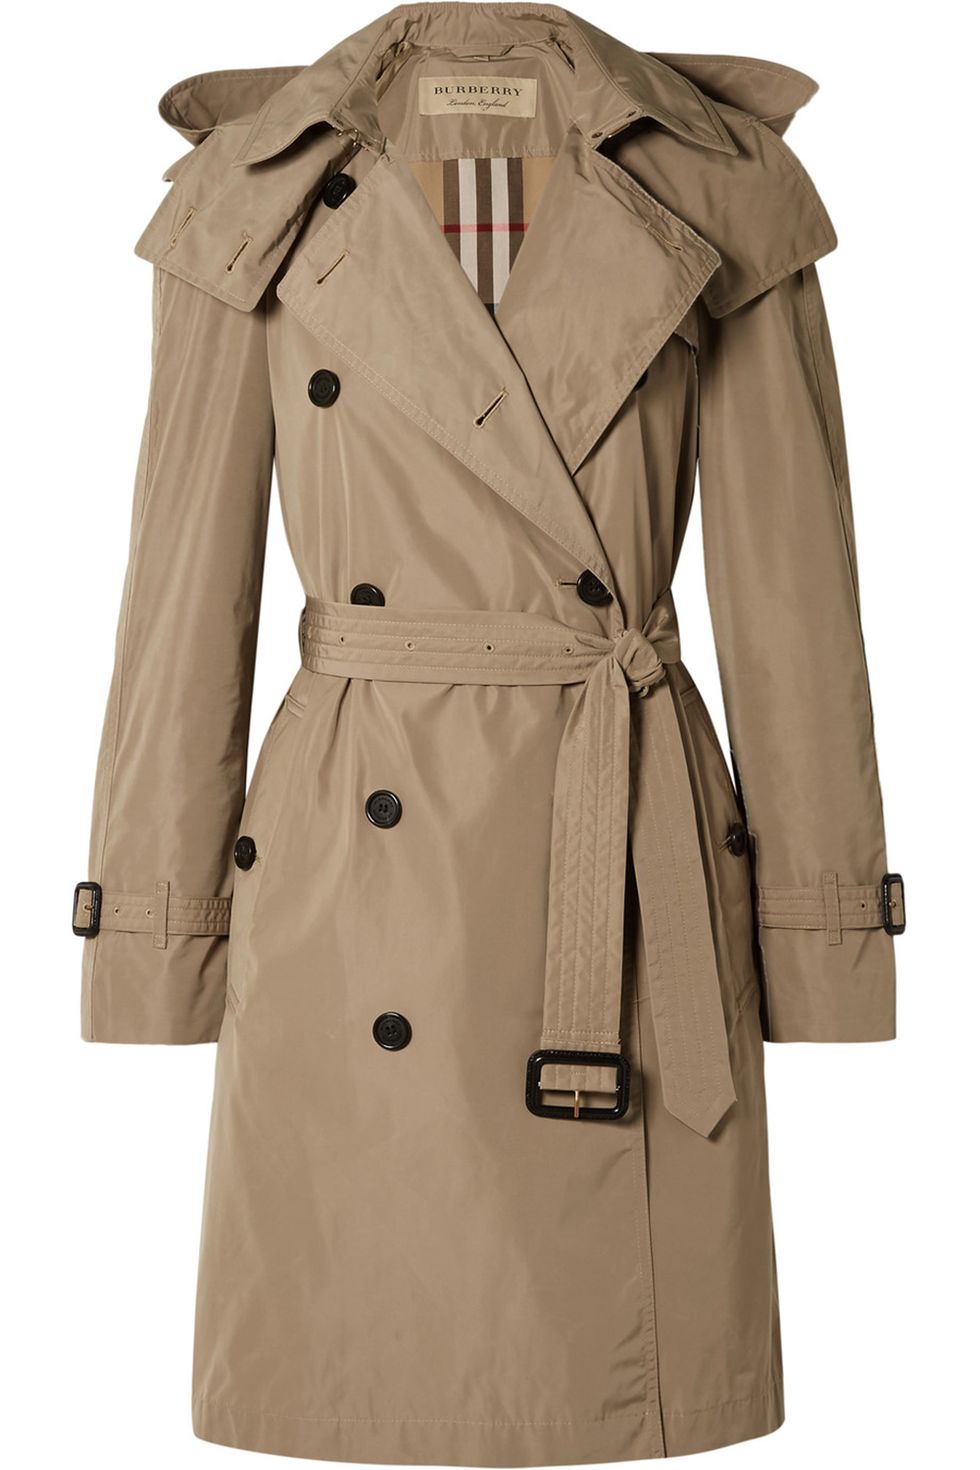 Clothing, Trench coat, Coat, Outerwear, Overcoat, Beige, Sleeve, Duster, Jacket, Collar, 